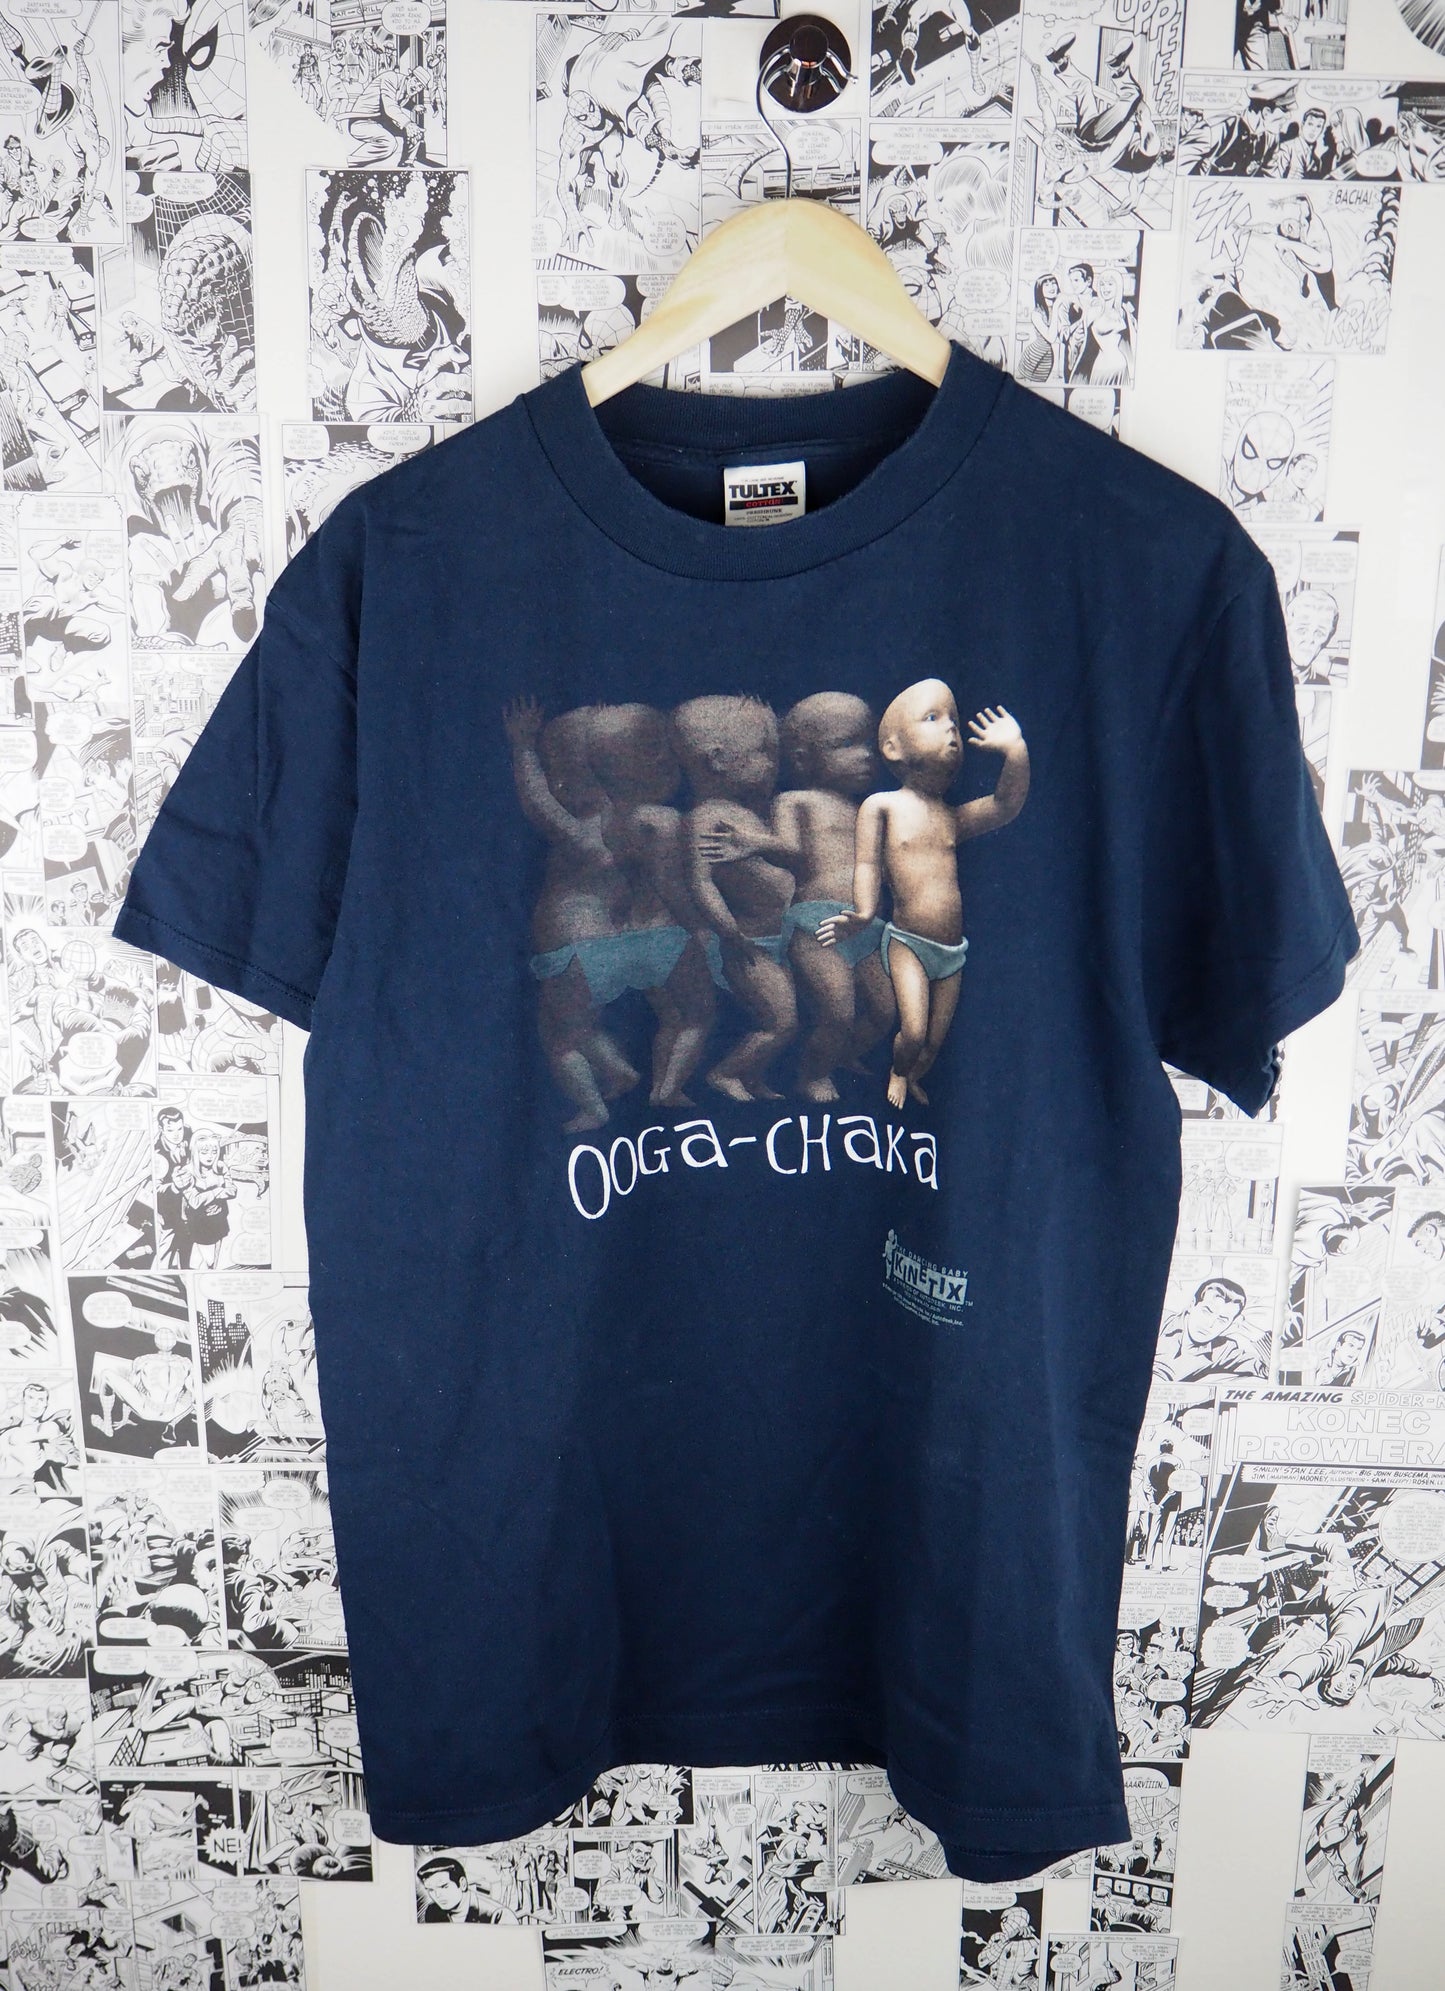 Vintage "Baby Cha-Cha" 1998 t-shirt - size L